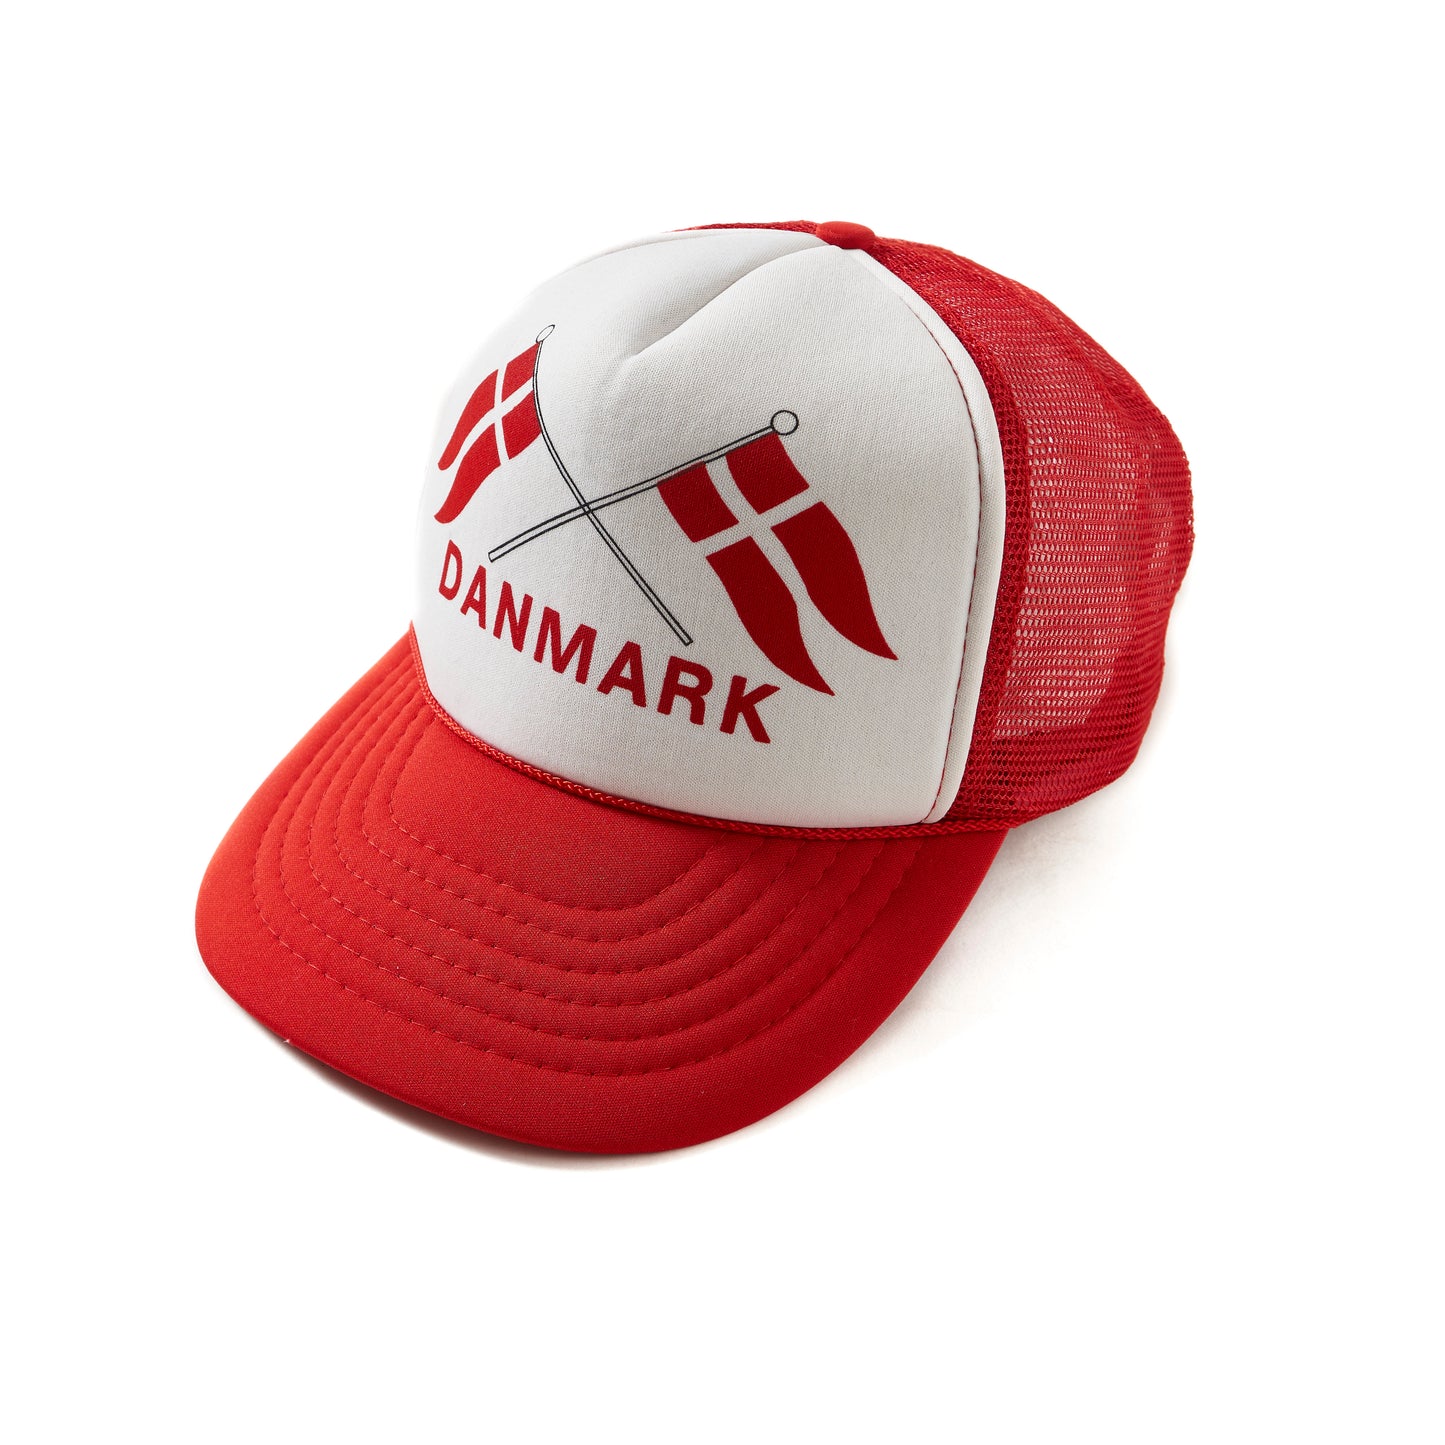 Vintage Denmark Trucker Hat